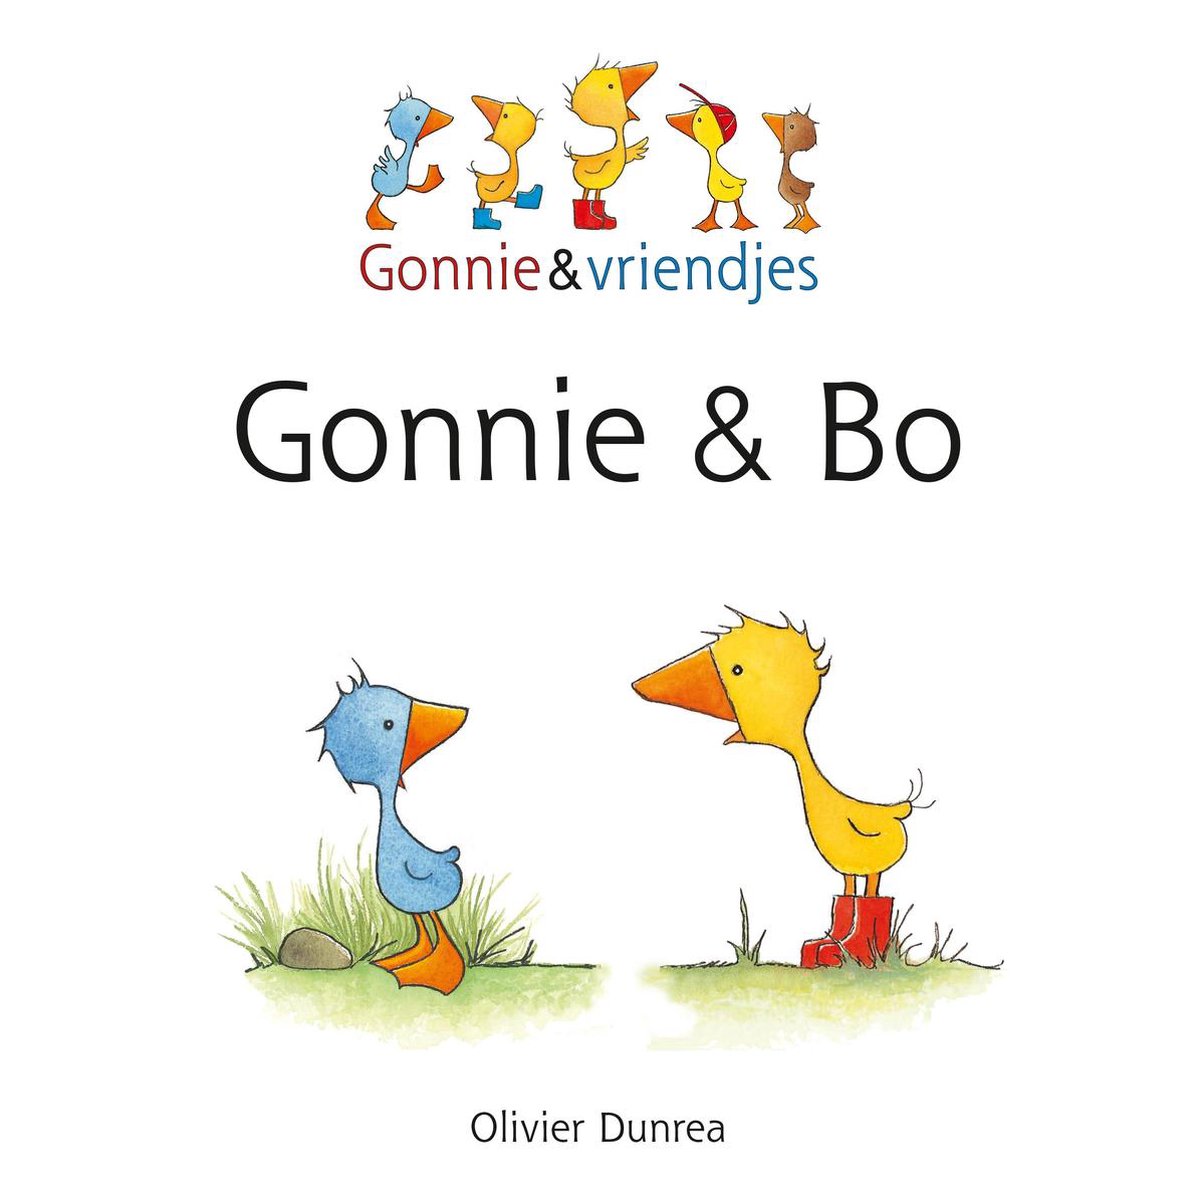 Gonnie & vriendjes - Gonnie & Bo